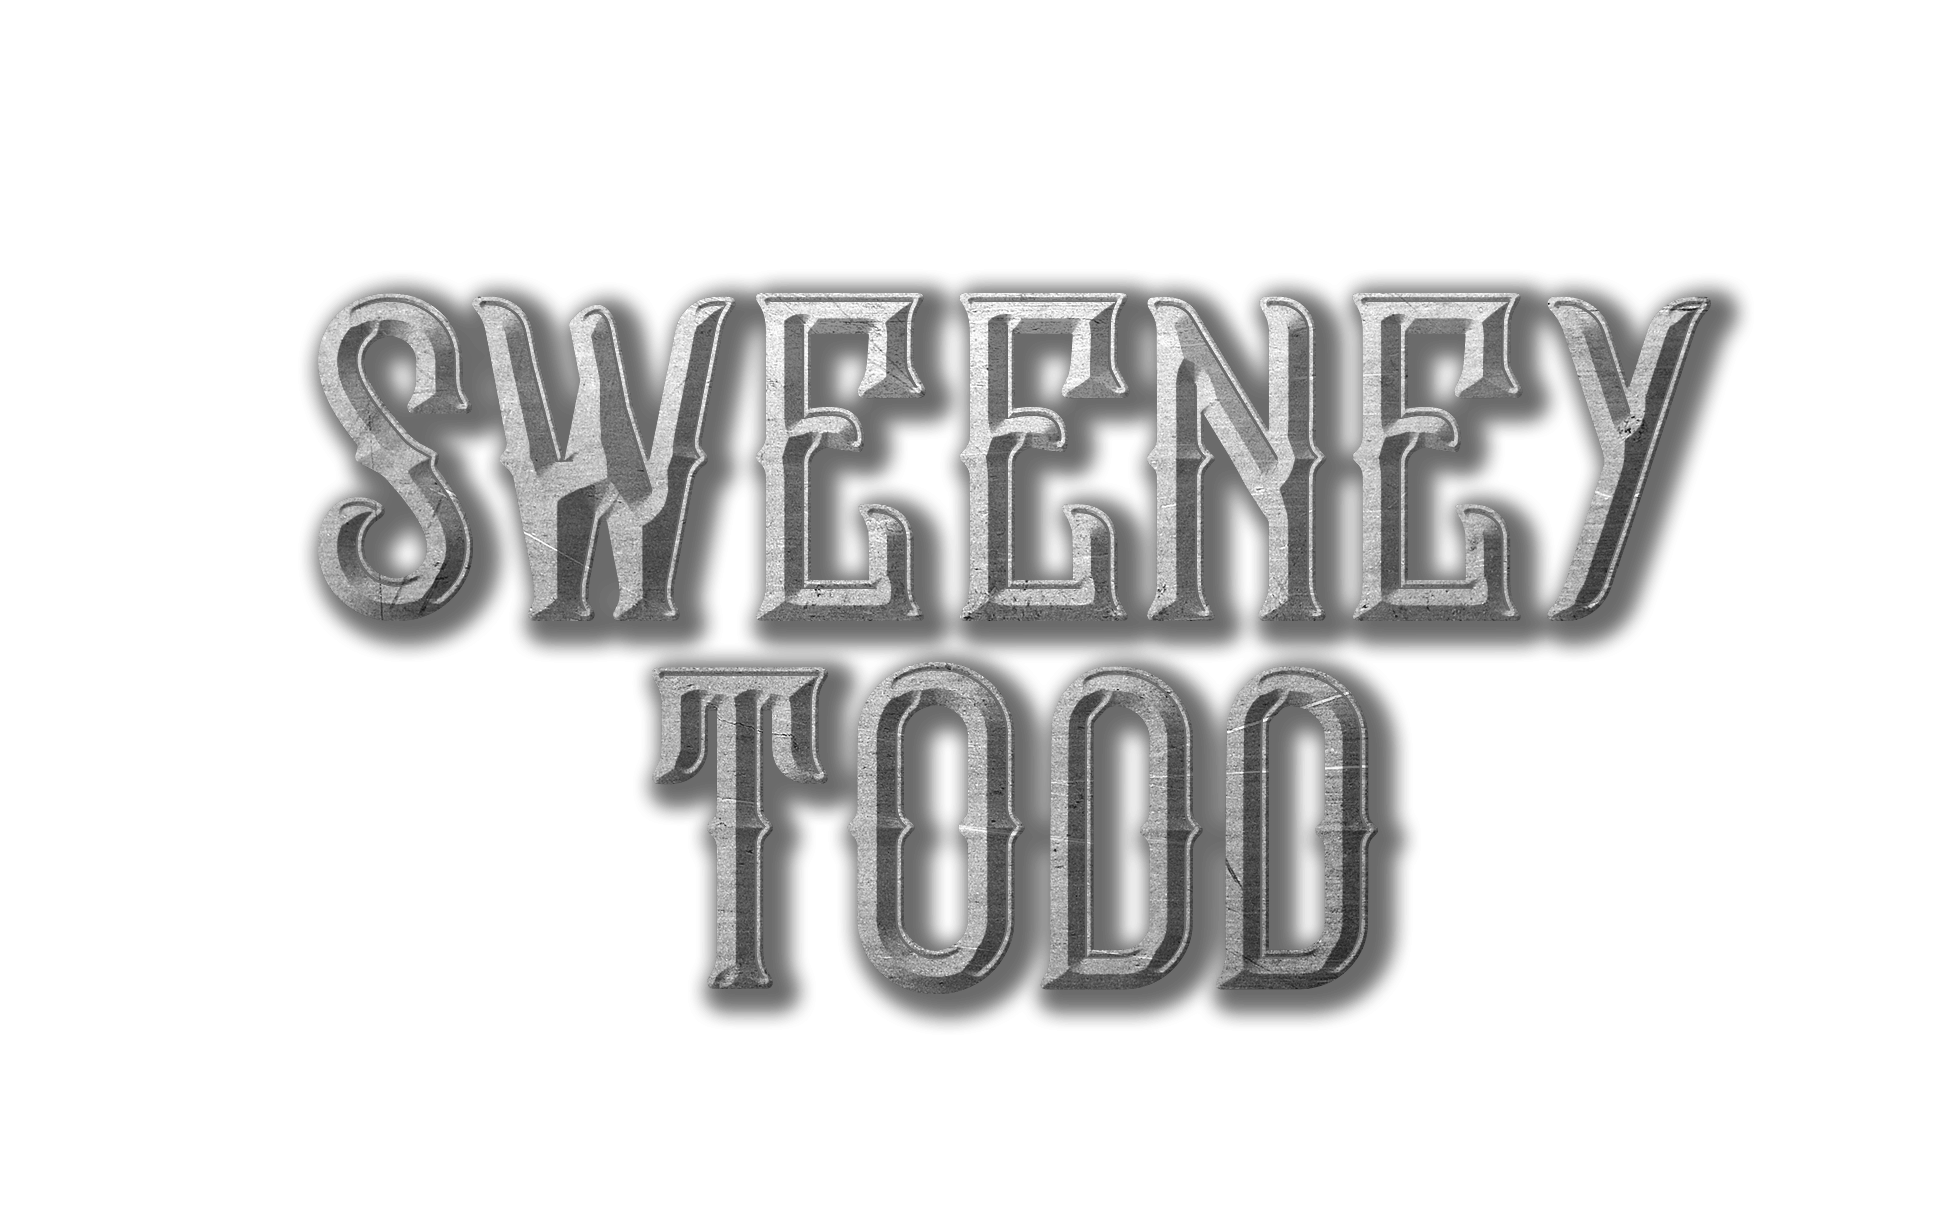 Todd Logo - Sweeney Todd Logo BW